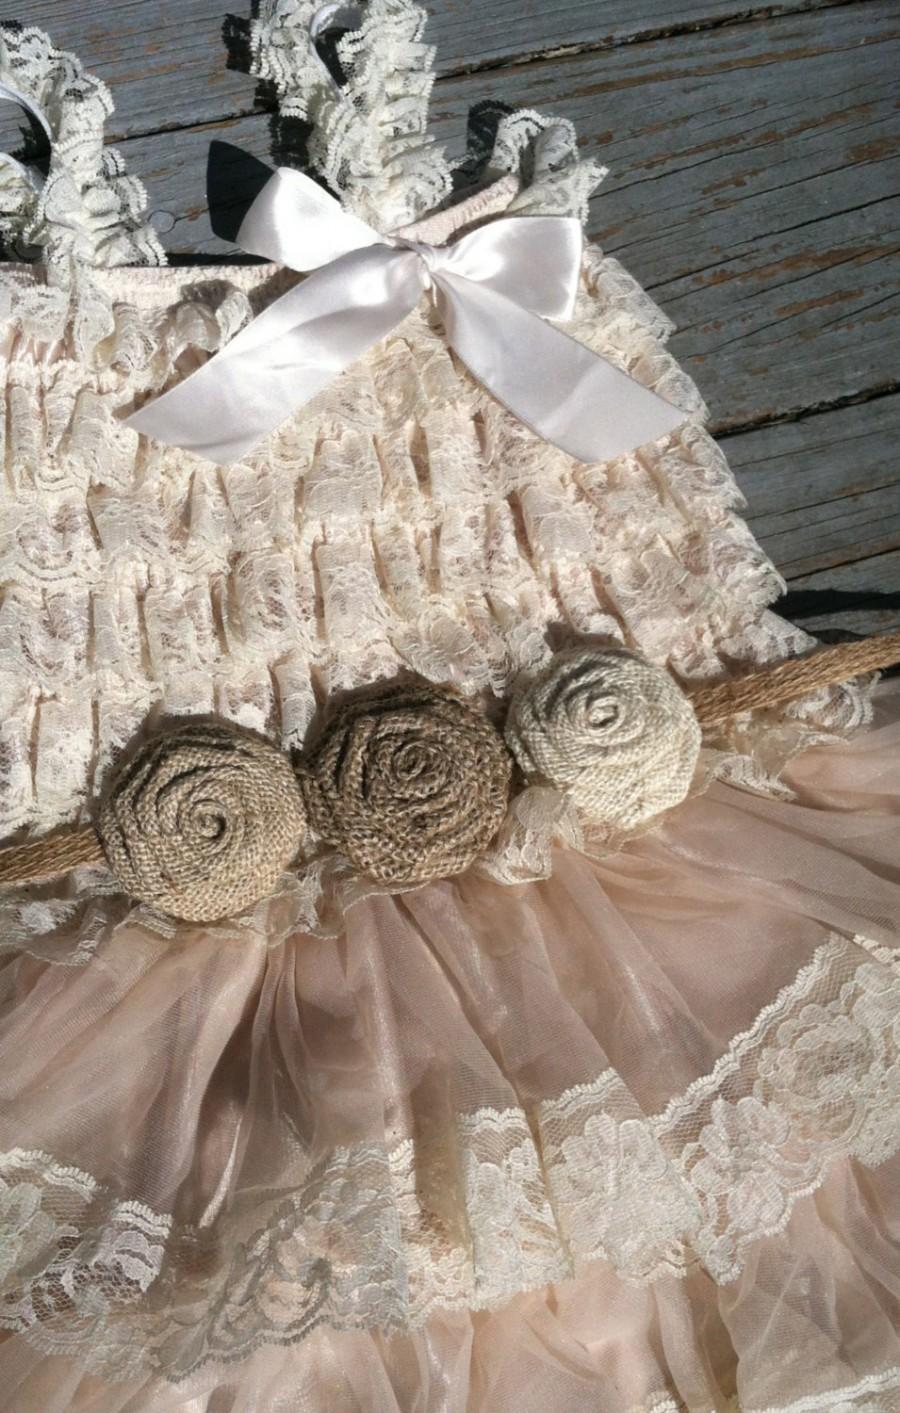 Wedding - Rustic Flower Girl Dress Lace Pettidress/Rustic Flower Girl Outfit/Wheat Cream Flowergirl/Country Wedding/Burlap/Jute Belt